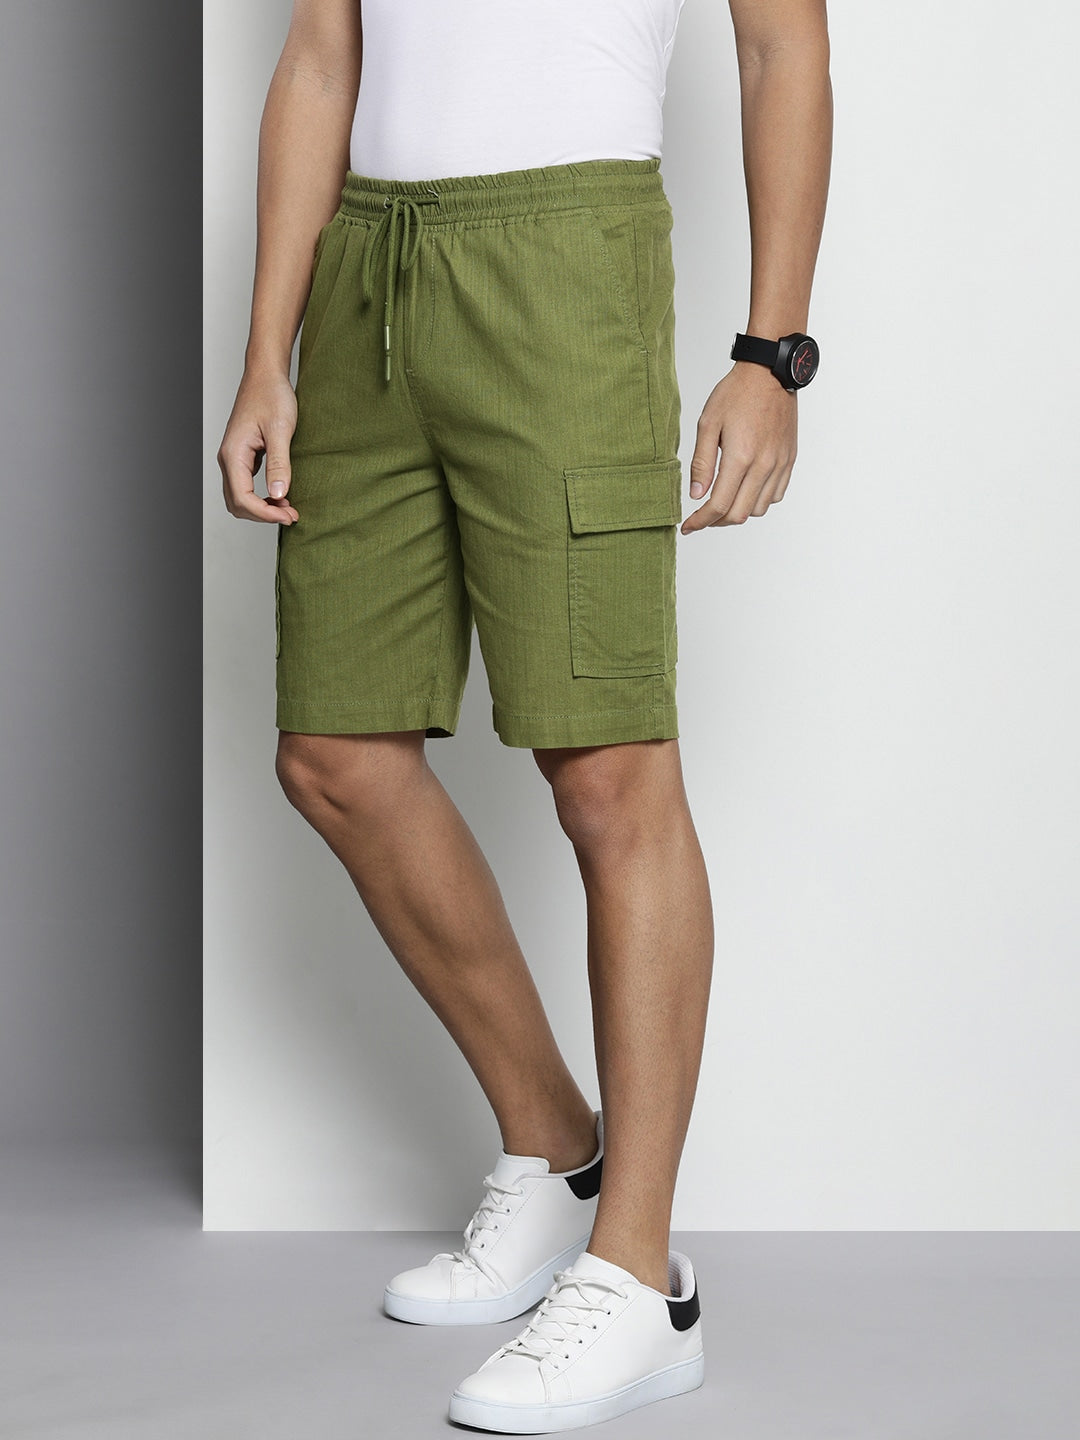 Shop Men Linen Cargo Shorts Online.